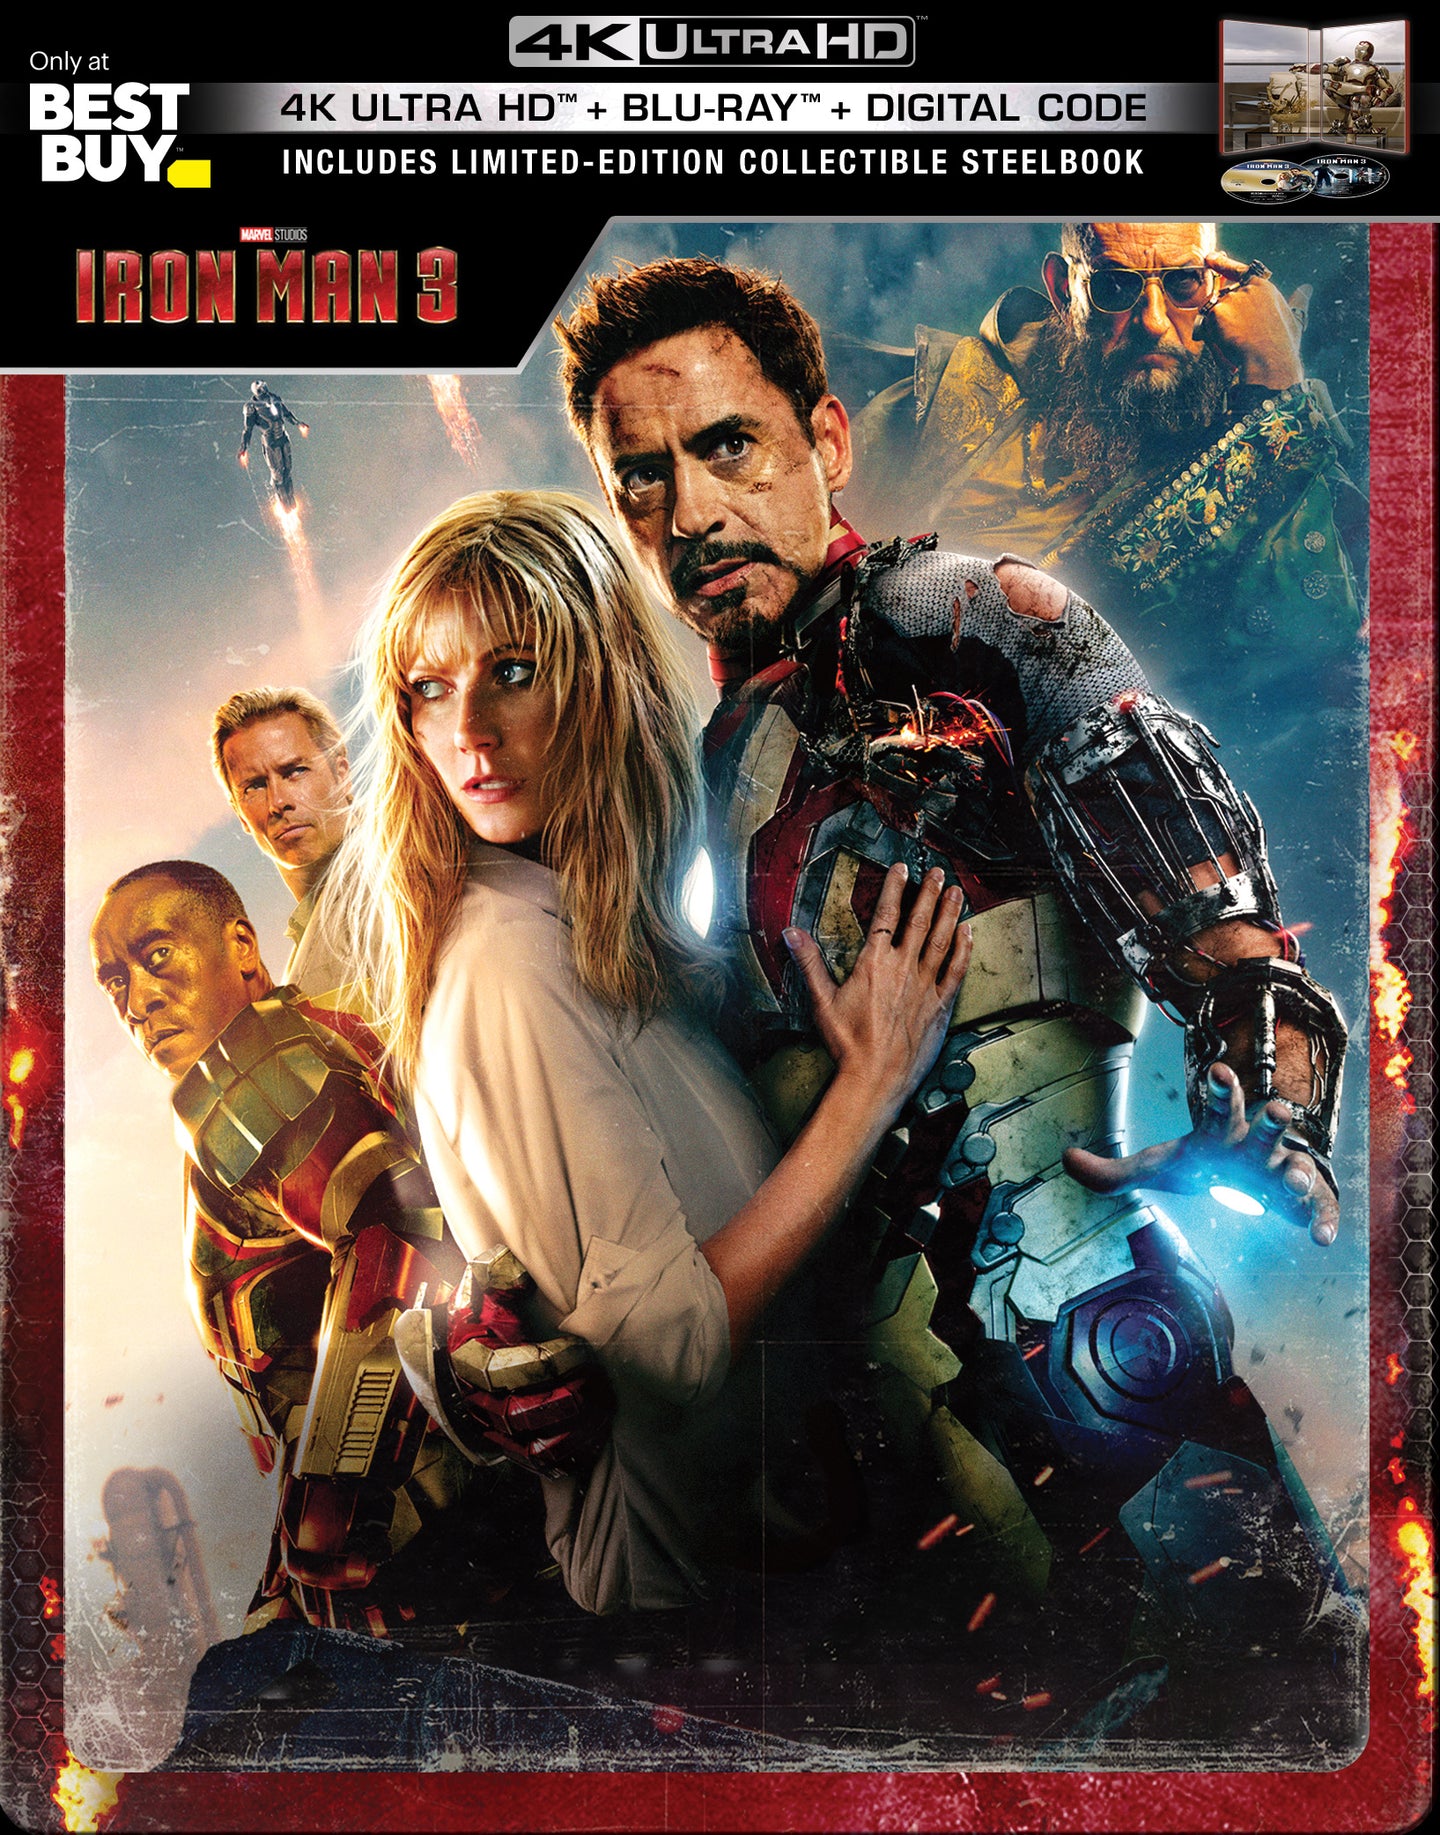 Iron Man 3 (2013: Ports Via MA) iTunes 4K code